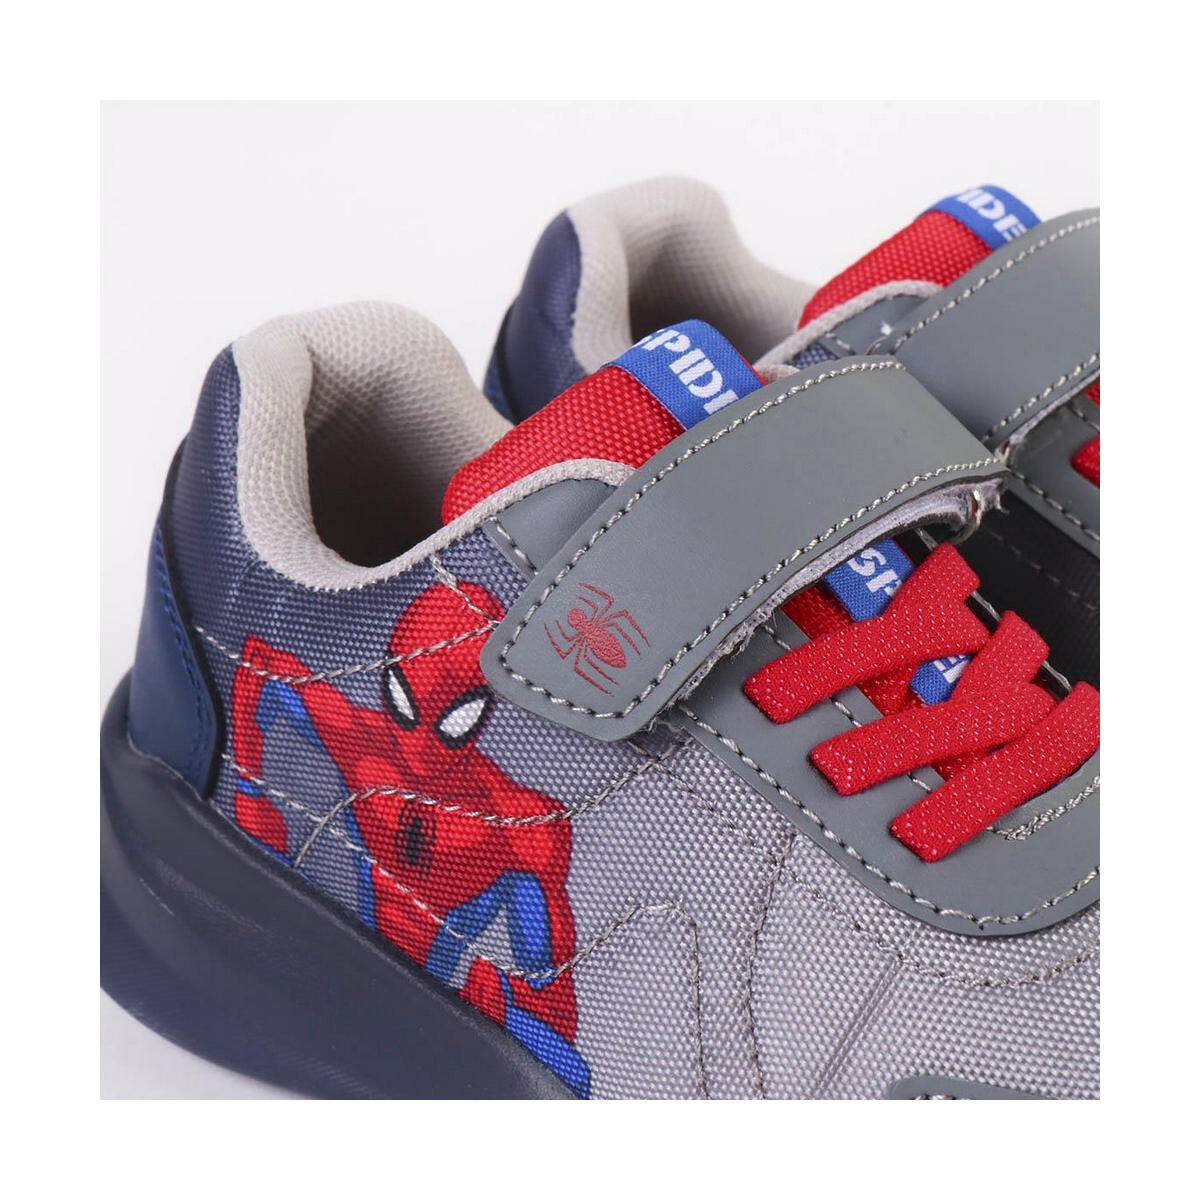 Chaussures de Sport pour Enfants Spider-Man Gris - Spider-Man - Jardin D'Eyden - jardindeyden.fr